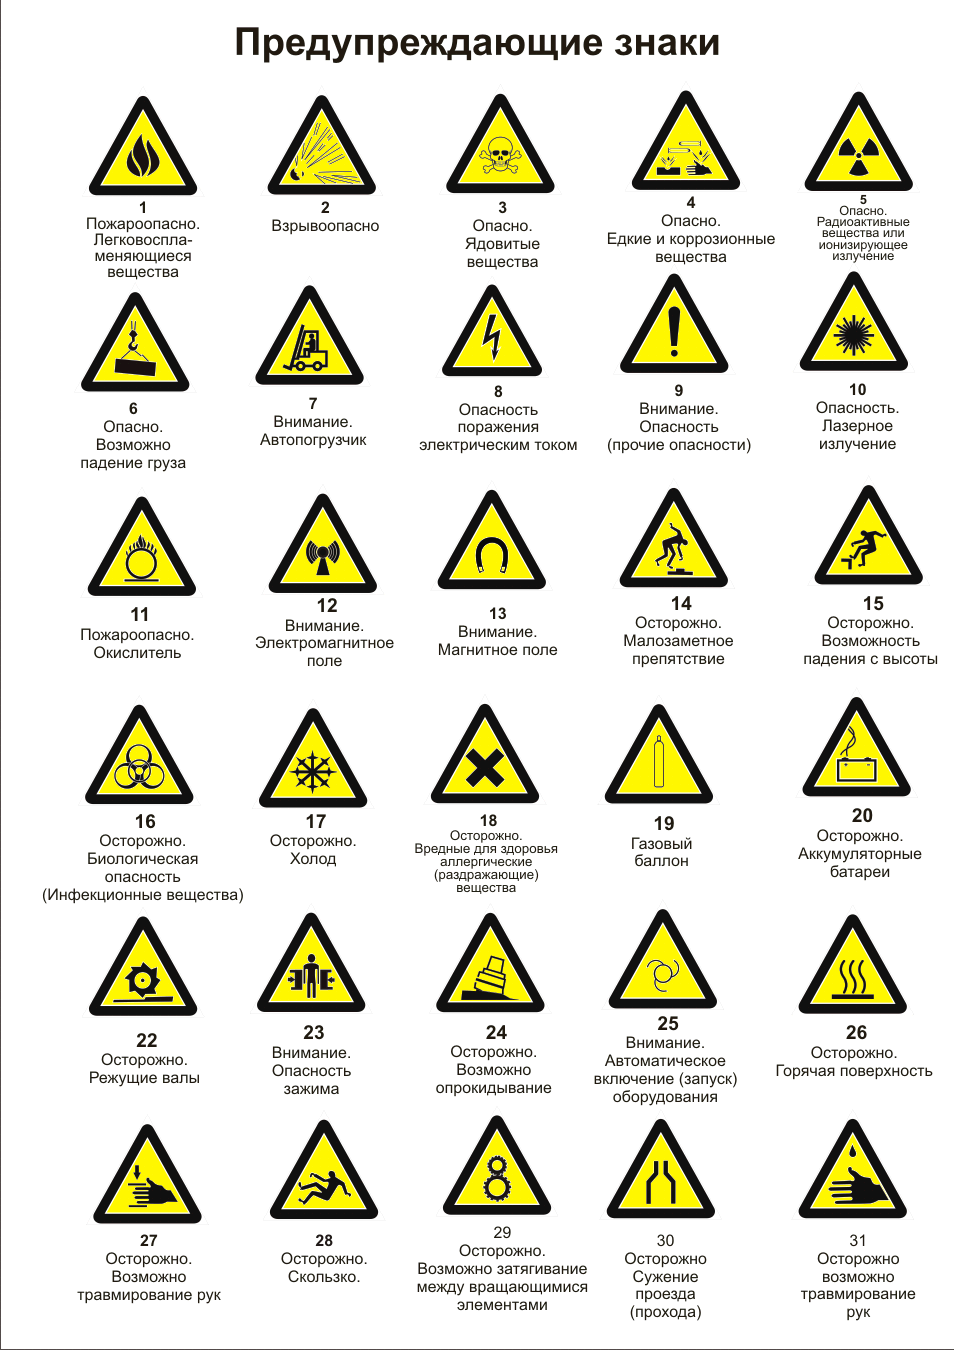 Какой знак предупреждает об опасности на дороге. Предупреждающие знаки. Предупреждеающиетзнакм. Преддупреждающие знак. Желтые знаки безопасности.